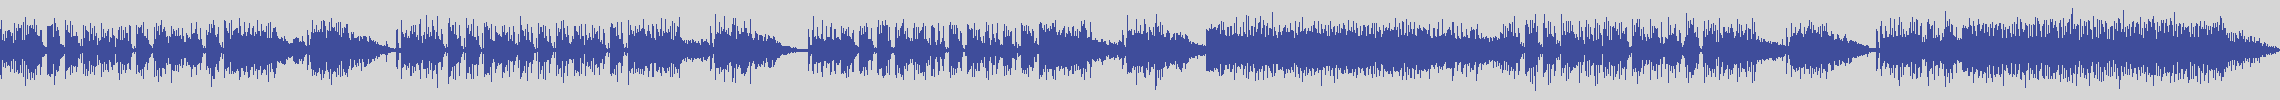 digiphonic_records [DPR013] Little Tony - Summertime Blues [Original Mix] audio wave form